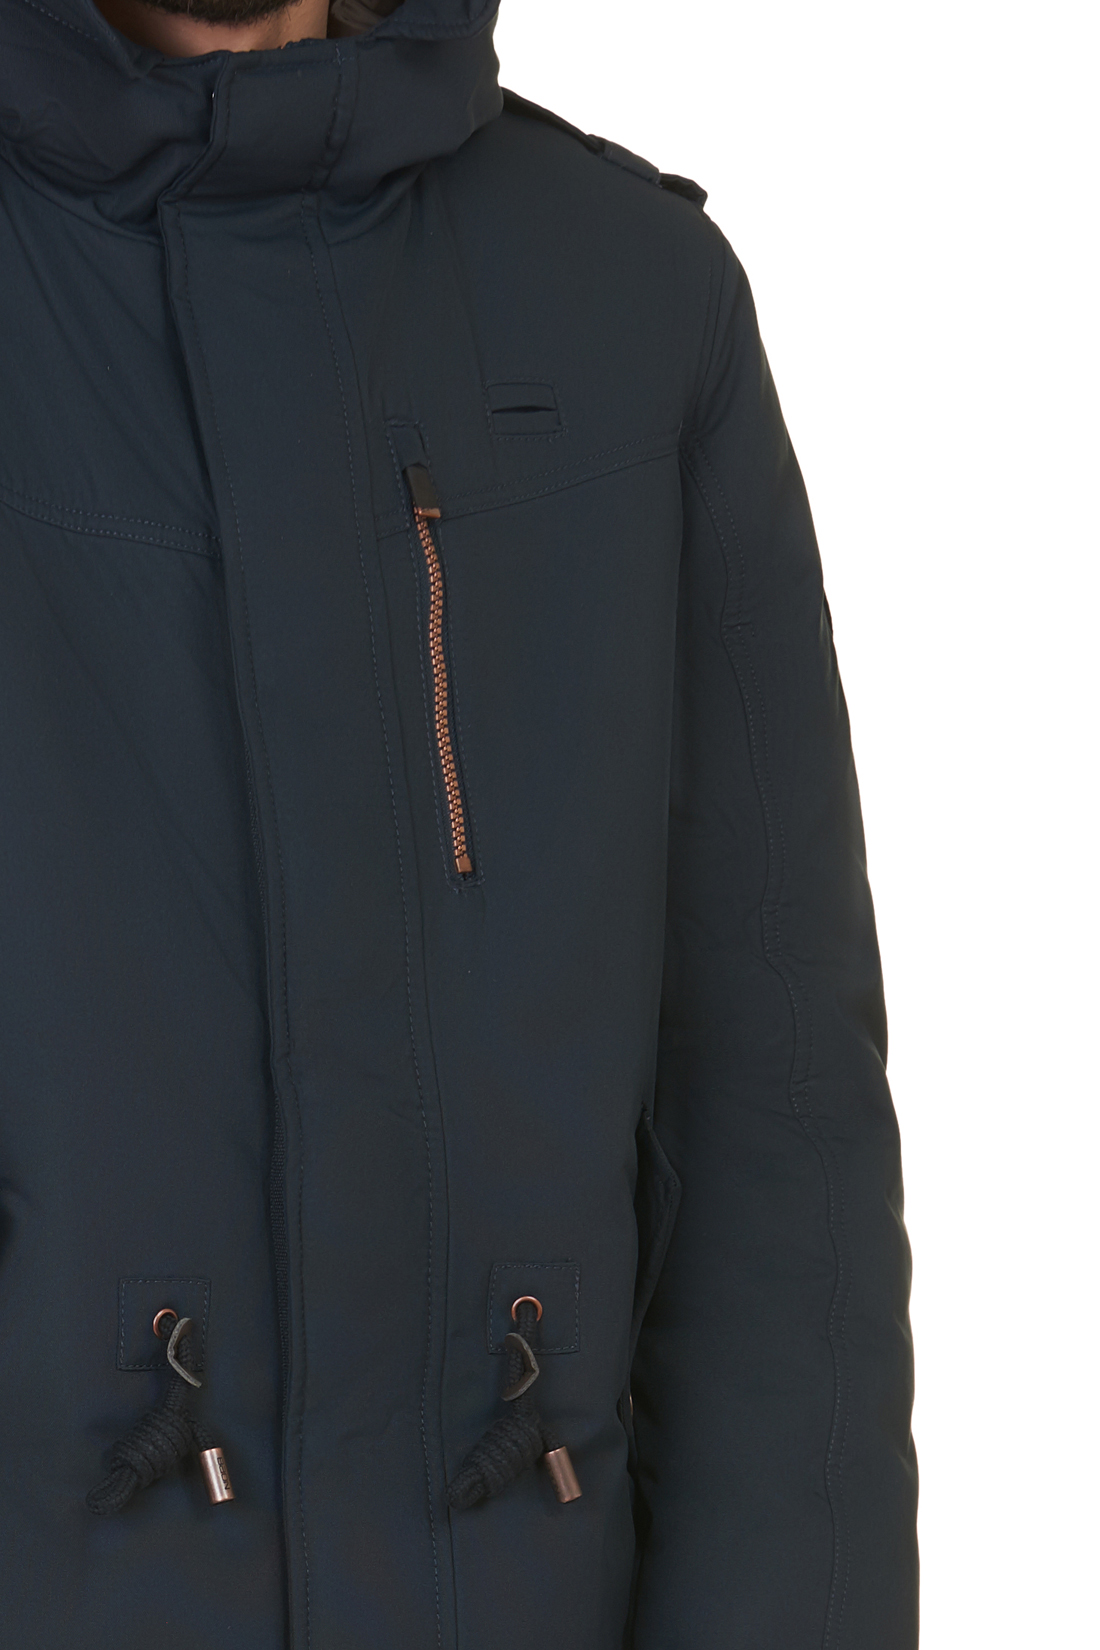 Удлинённая куртка-парка (арт. baon B537513), размер XL, цвет синий Удлинённая куртка-парка (арт. baon B537513) - фото 4